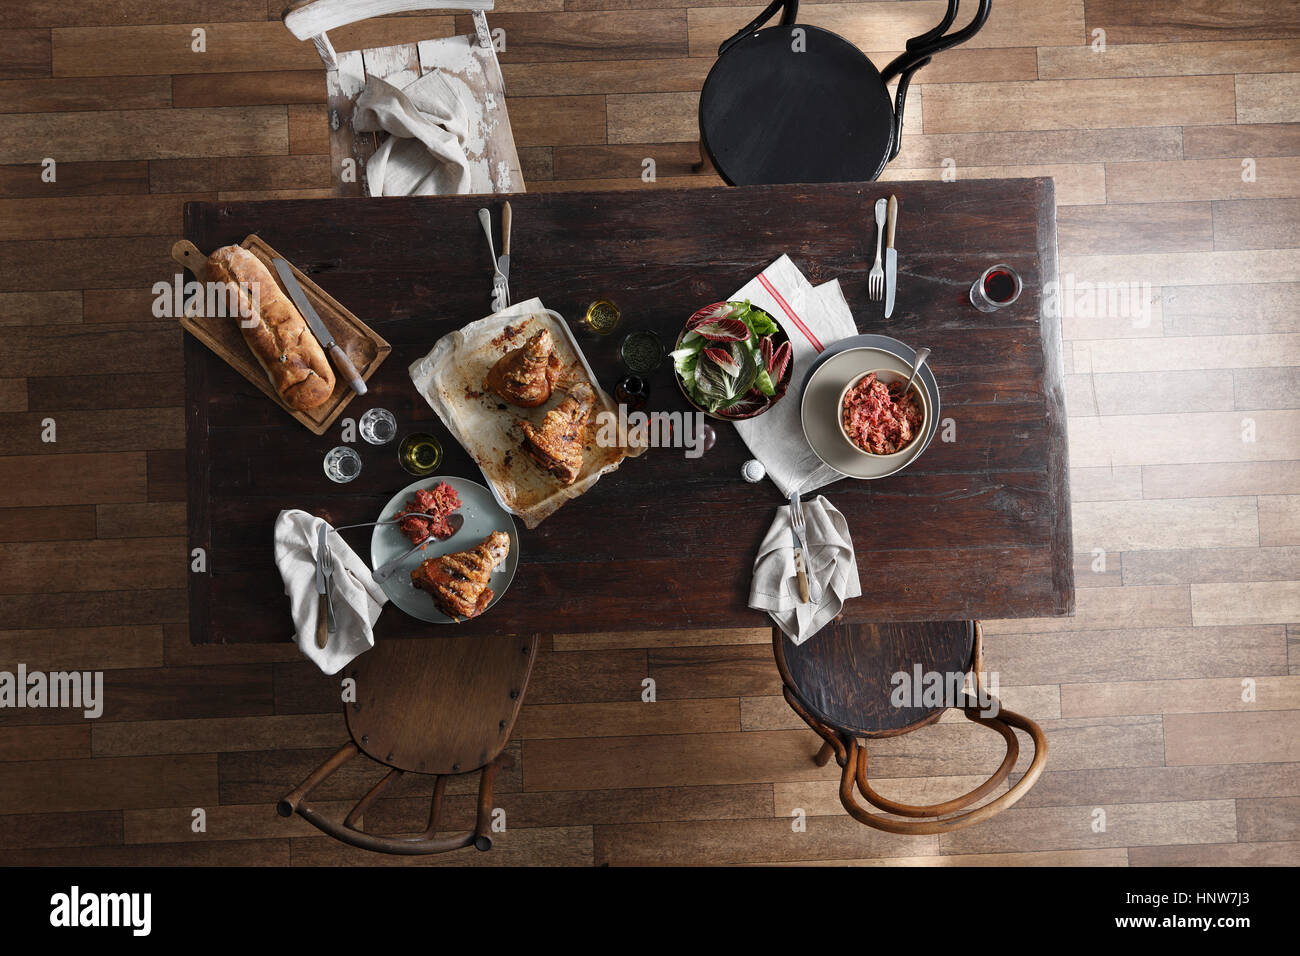 Pork hock, salad and fresh bread on restaurant table, overhead view Stock Photo